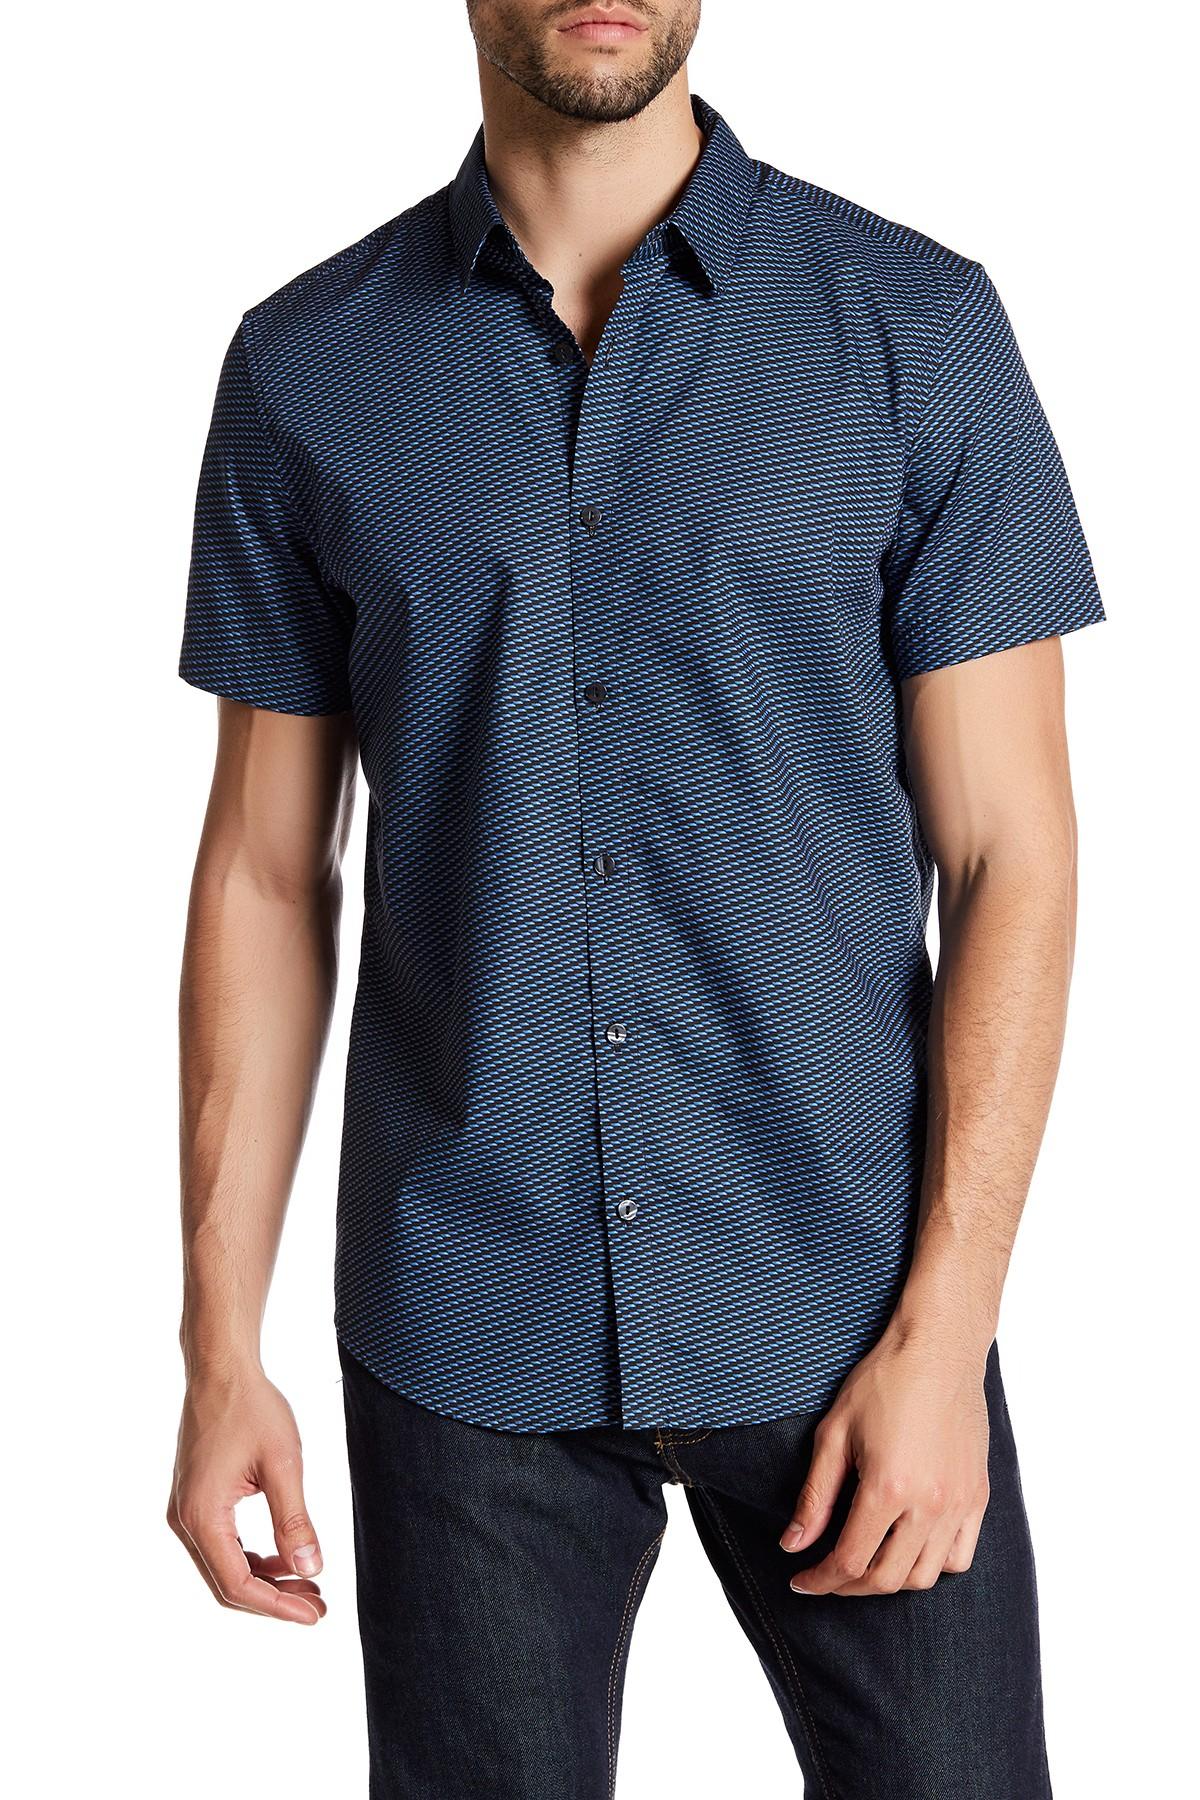 Lyst - Calvin Klein Deco Peak Collar Shirt in Blue for Men